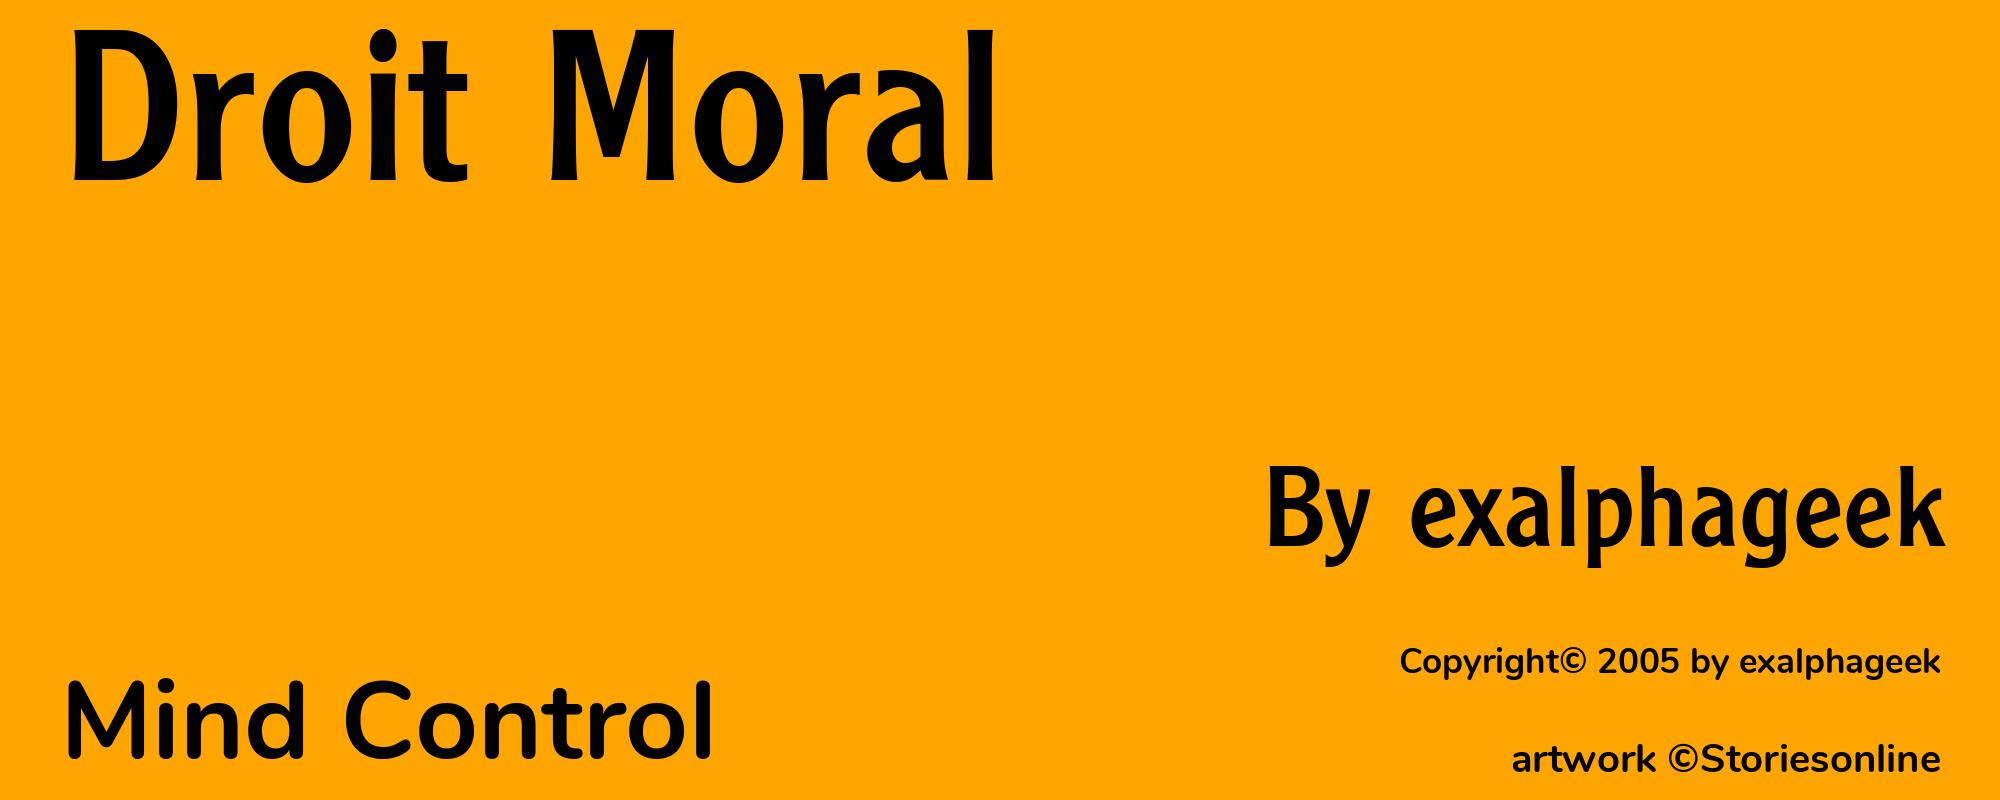 Droit Moral - Cover